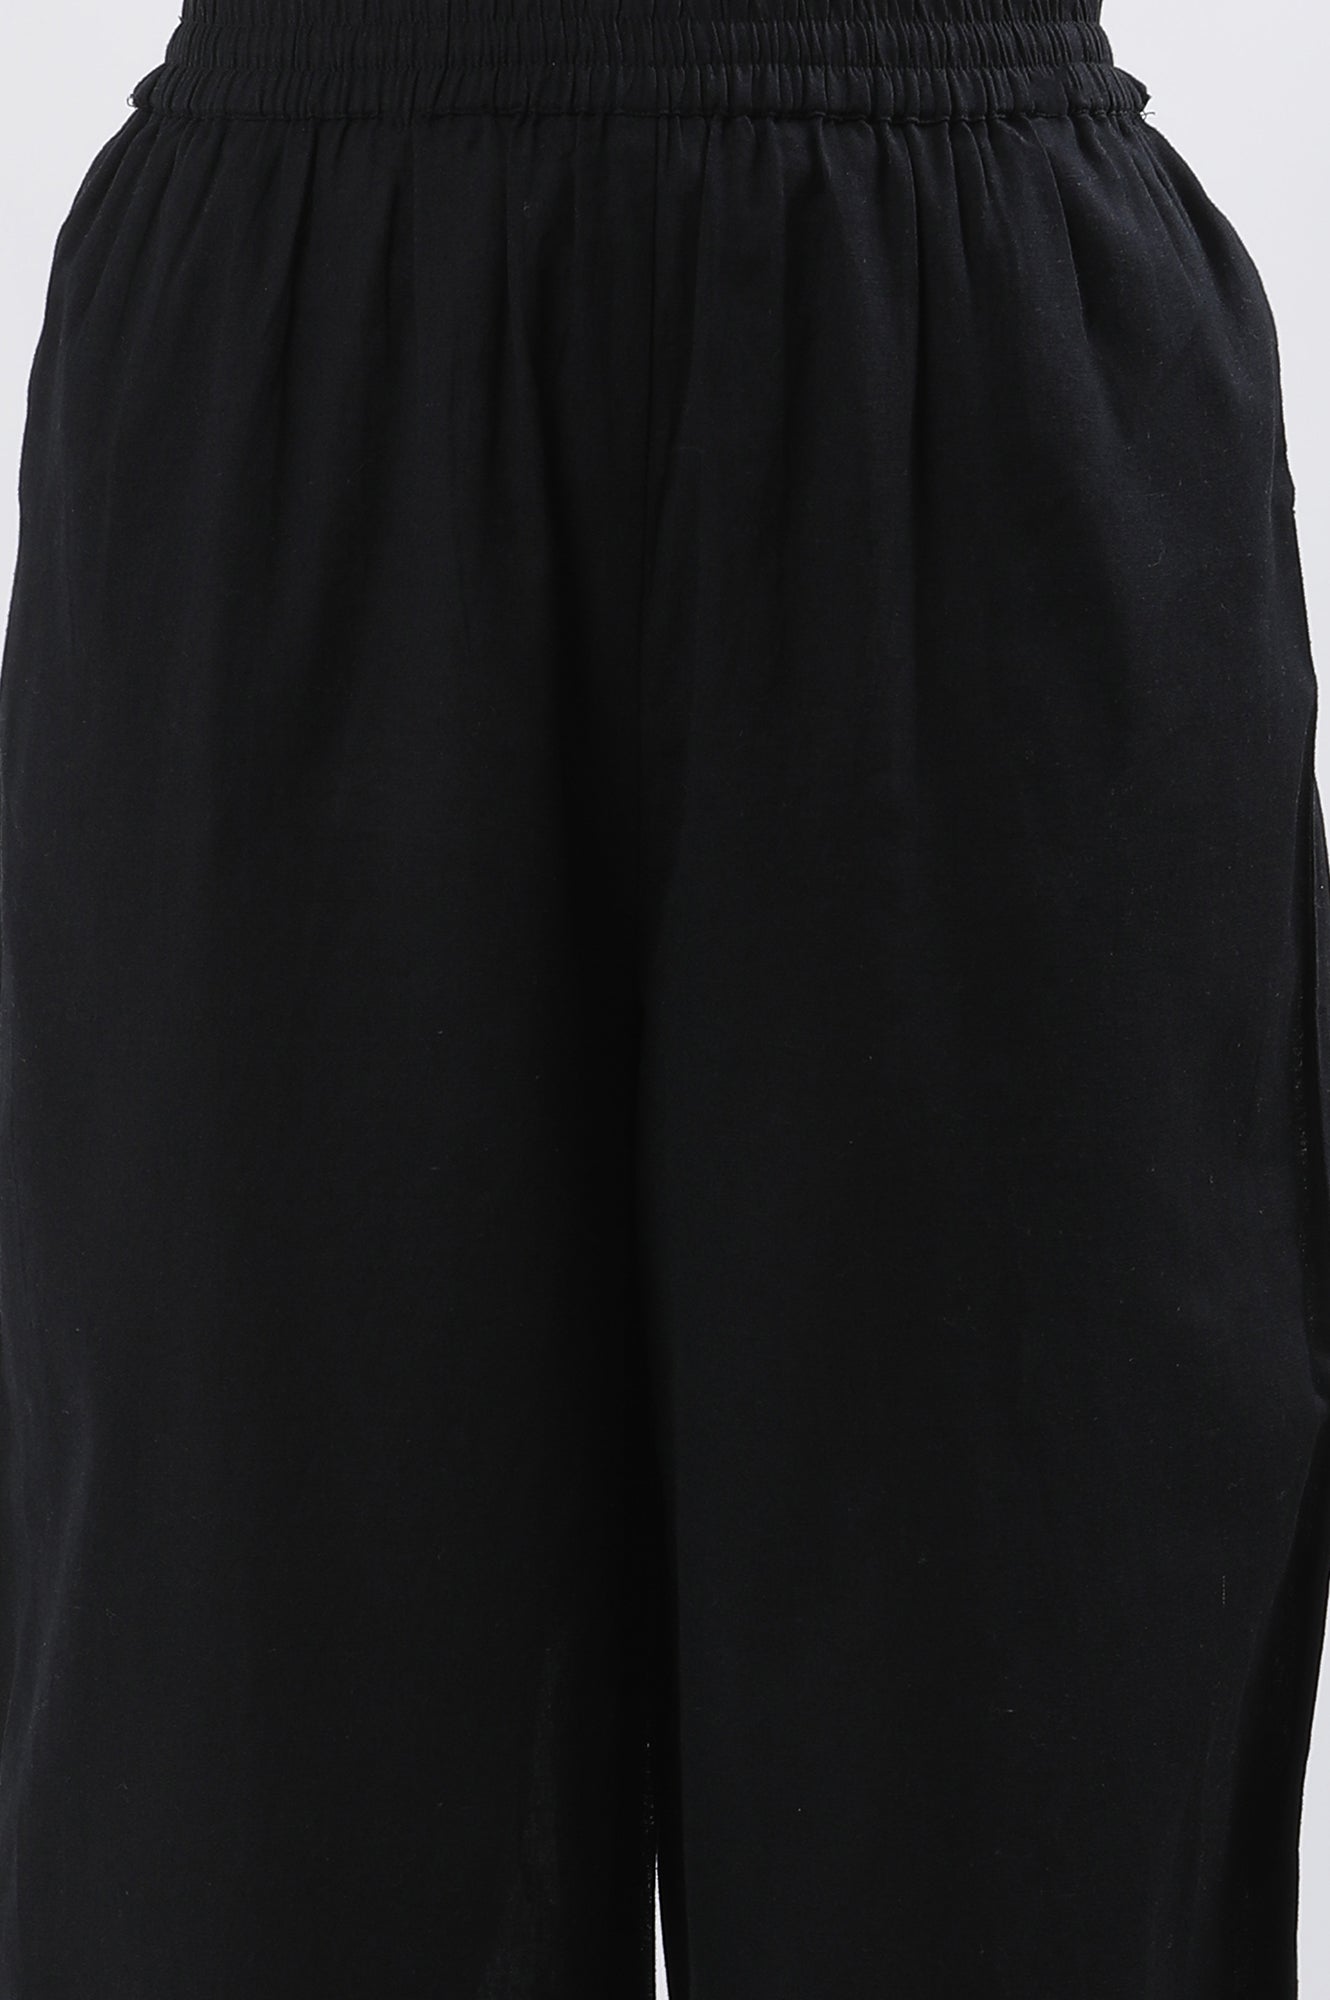 Black Sleeveless A-Line Top, Checker Jacket And Pants Set